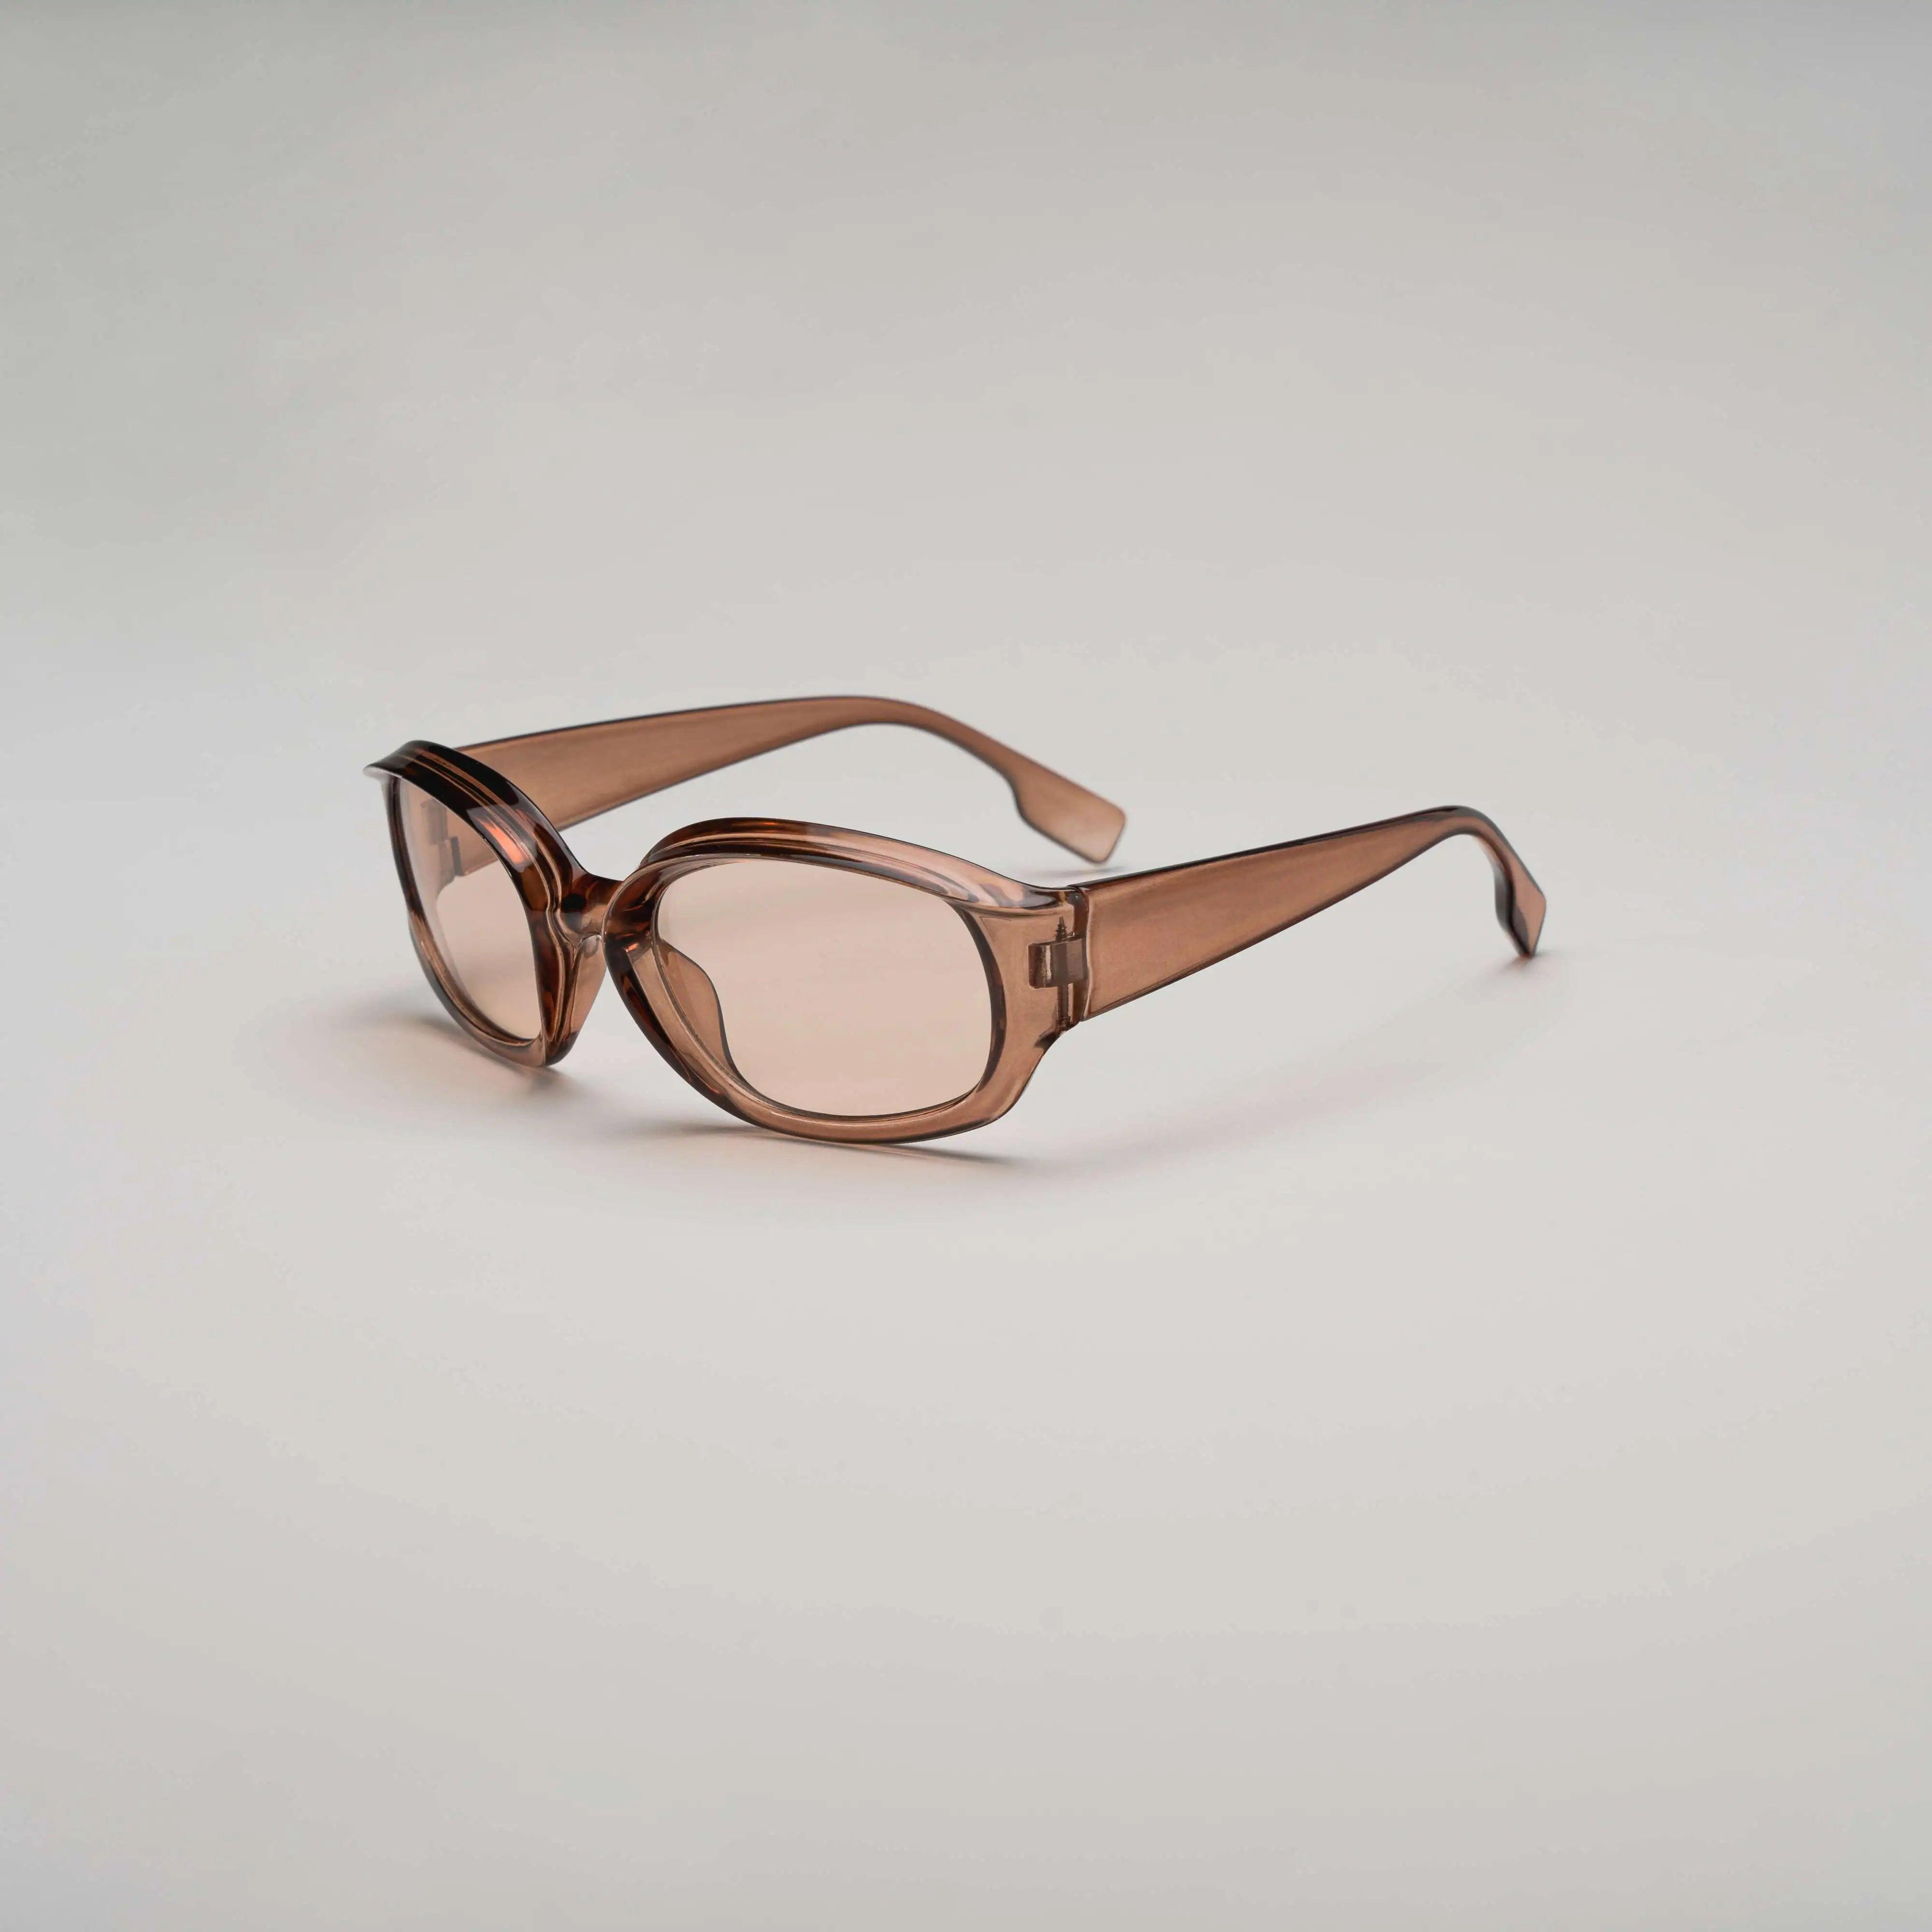 'Calabasas' Retro Wraparound Sunglasses in Brown